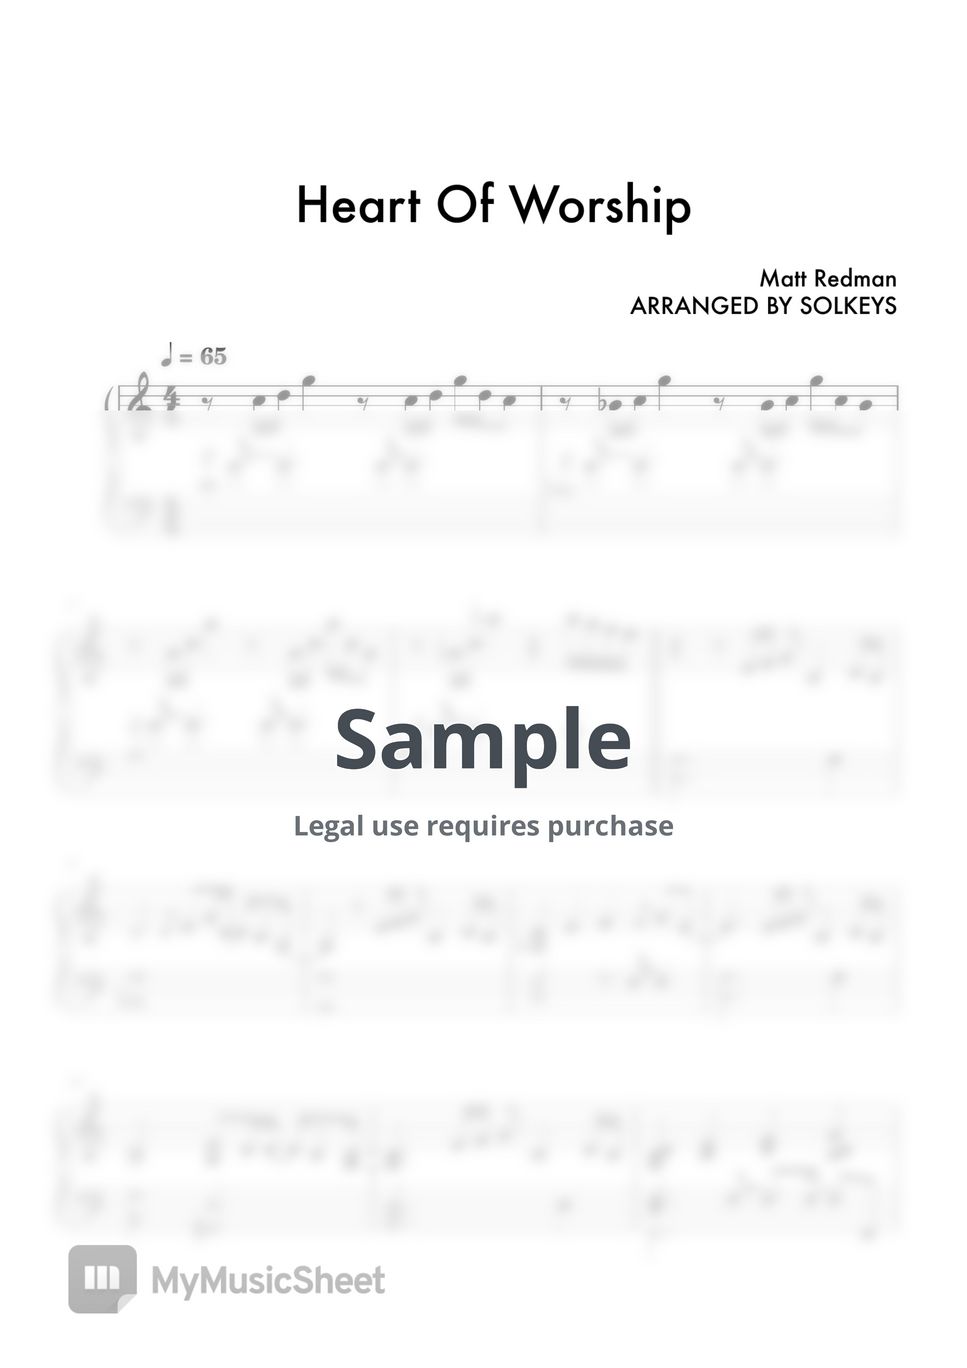 Matt Redman - Heart Of Worship by SolKeys